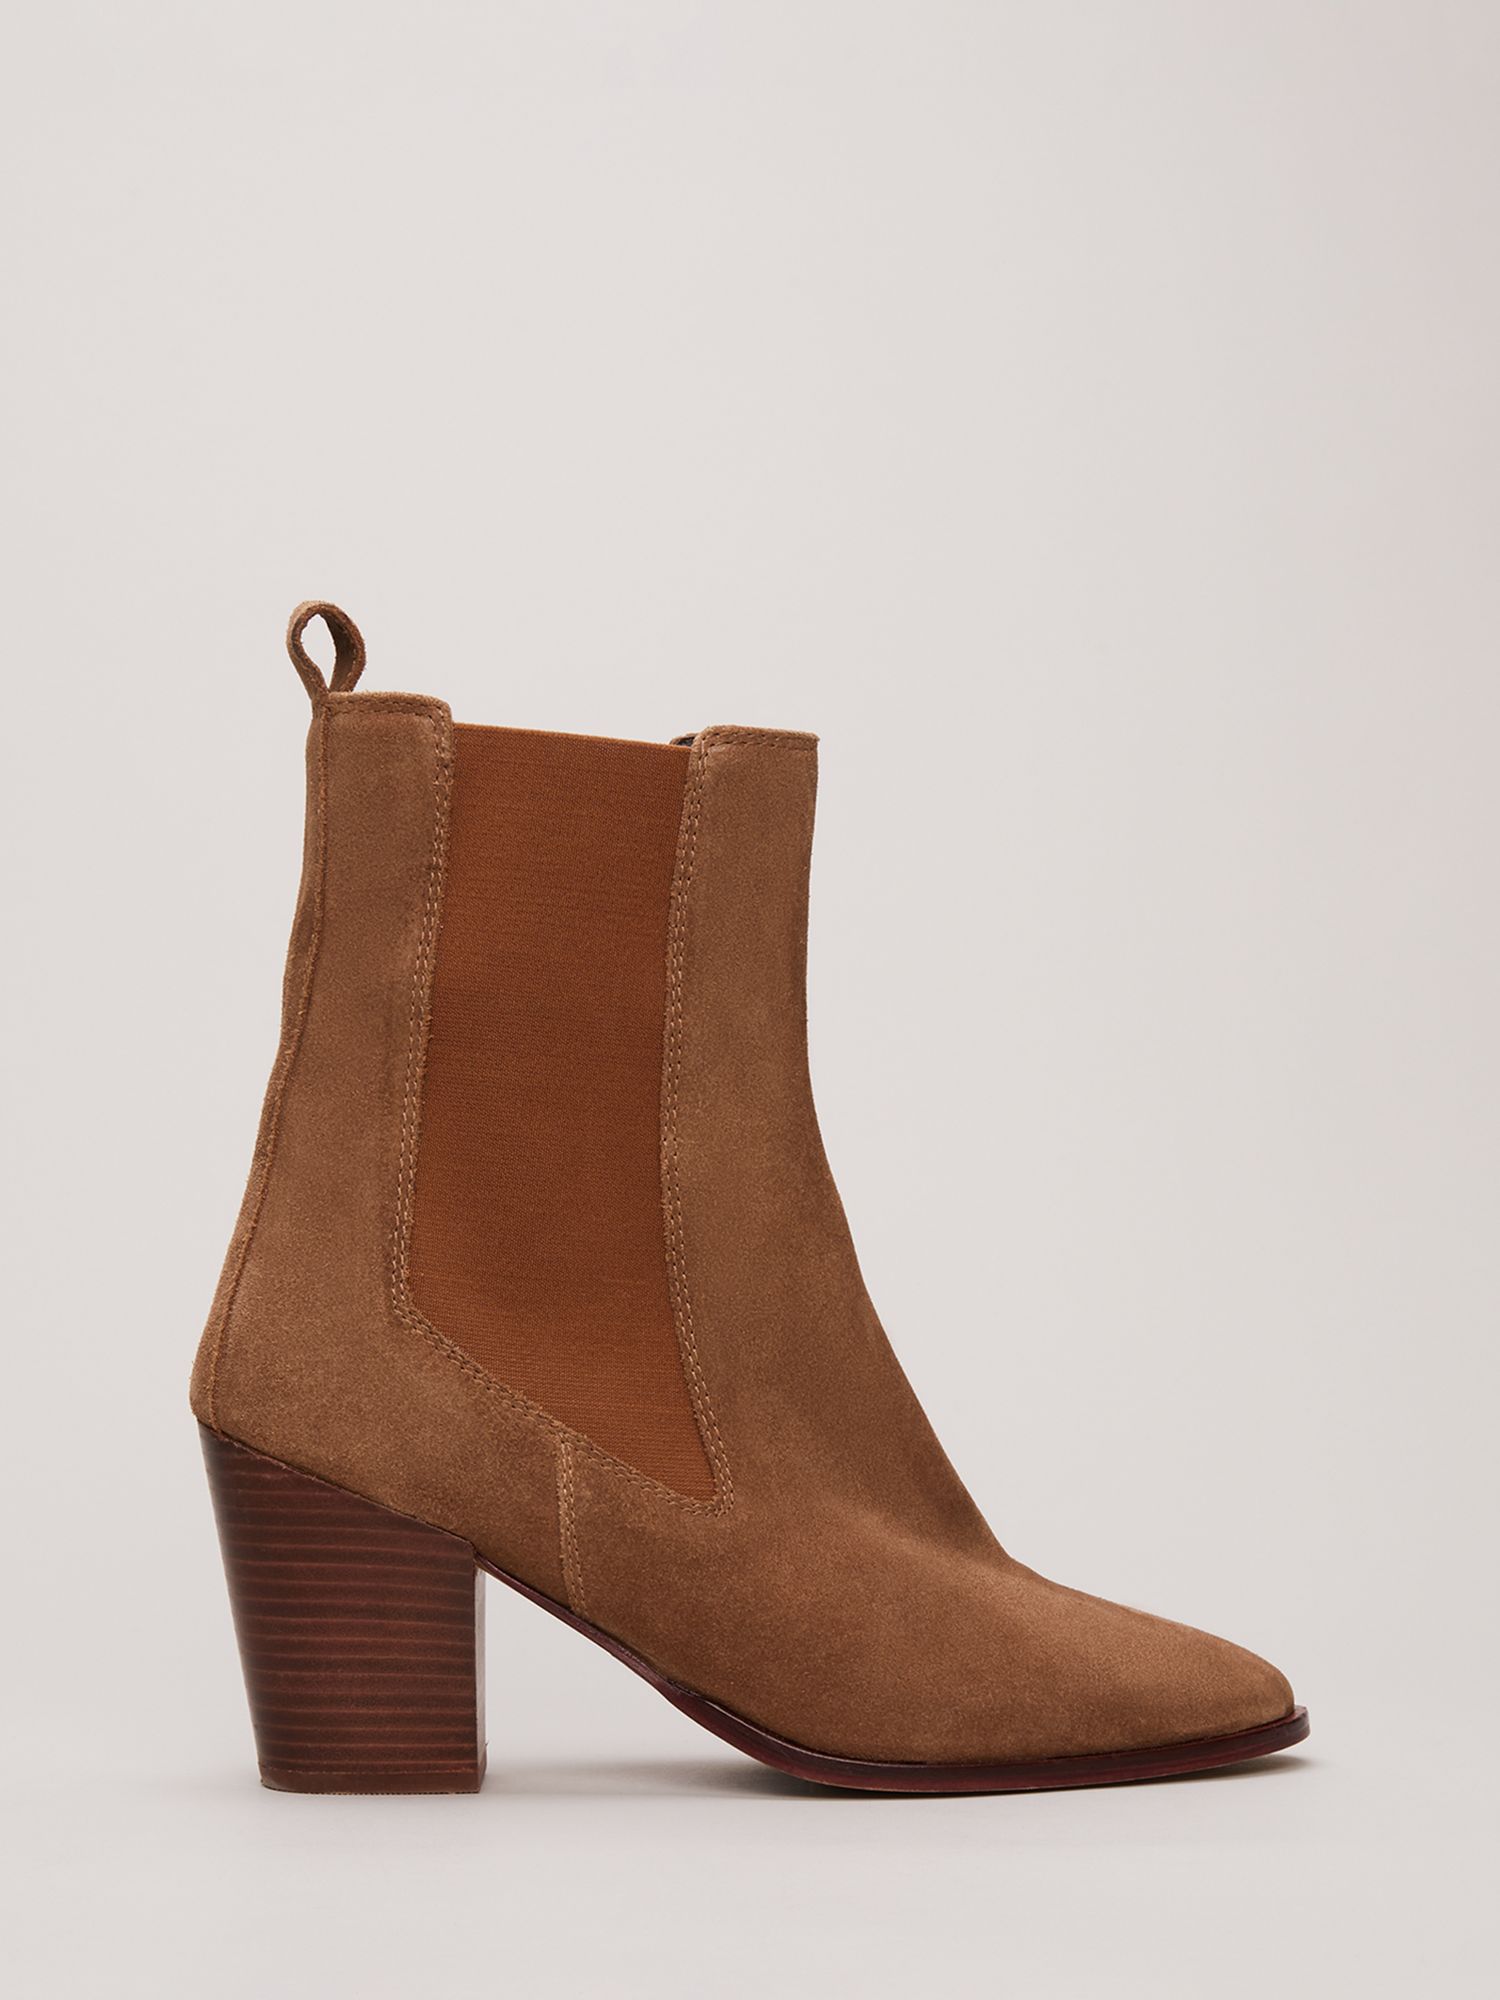 Women's Boots - Brown, Suede | John Lewis & Partners